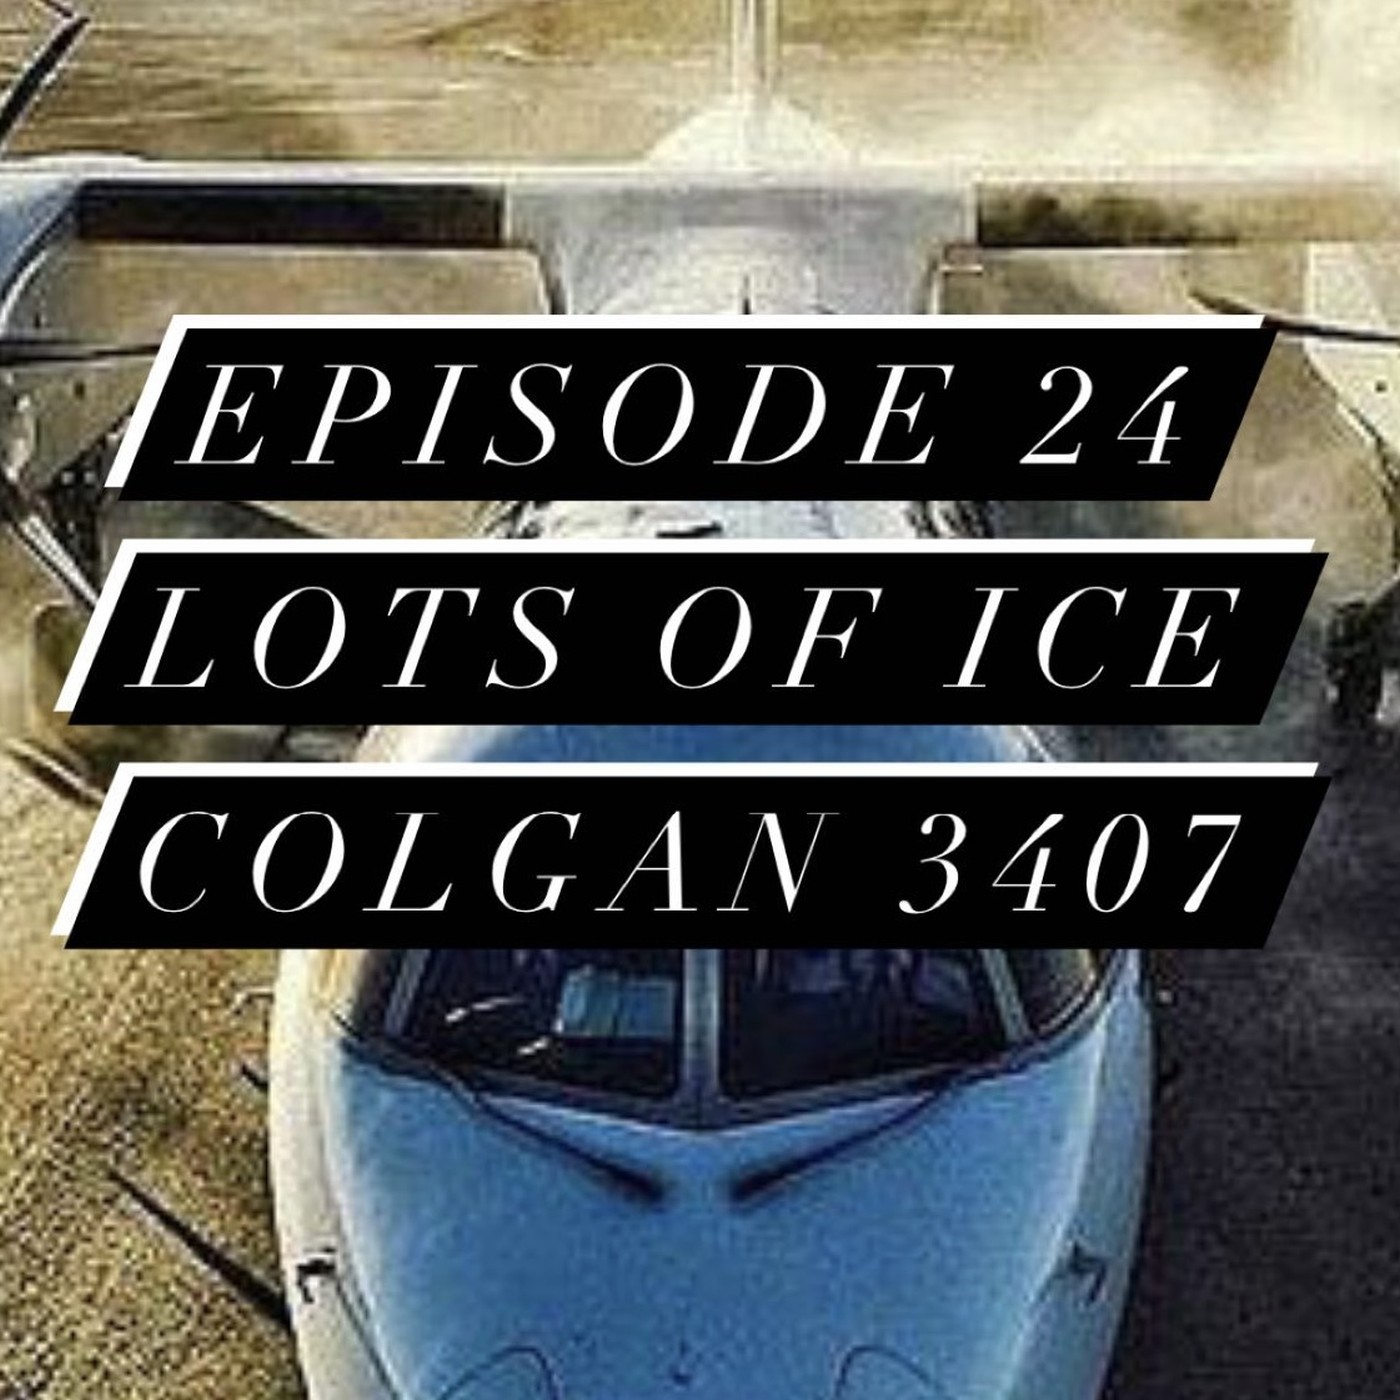 24. Lots of Ice - Colgan 3407